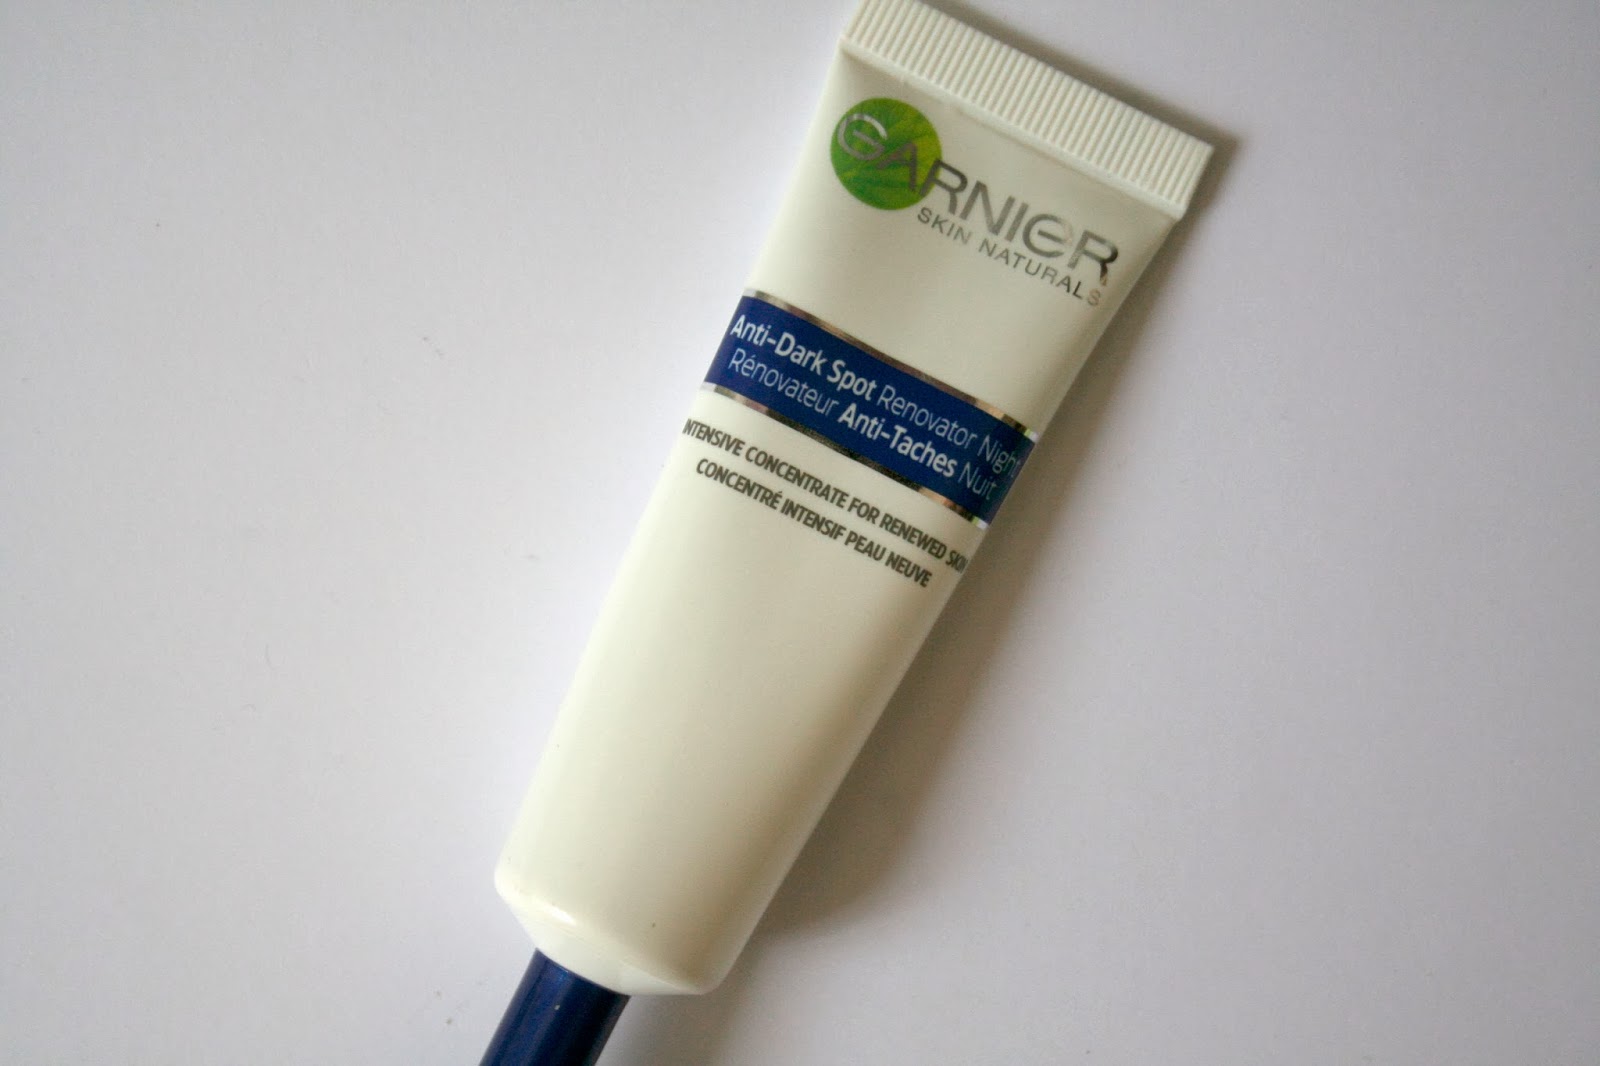 Tinh chất dưỡng Garnier Skincare Anti-Dark Spot Renovator Night